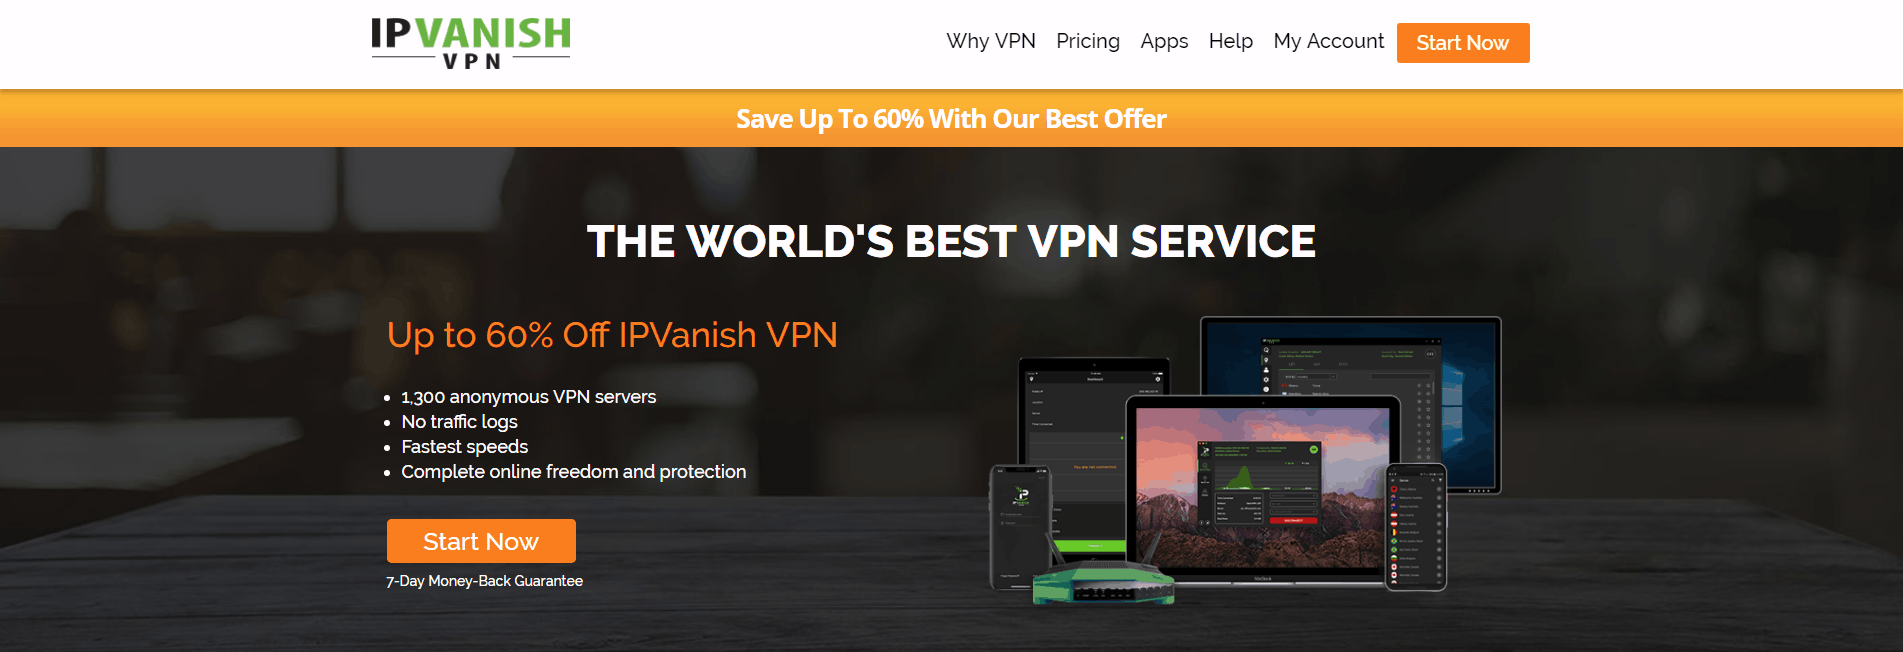 IPVanish Home Page